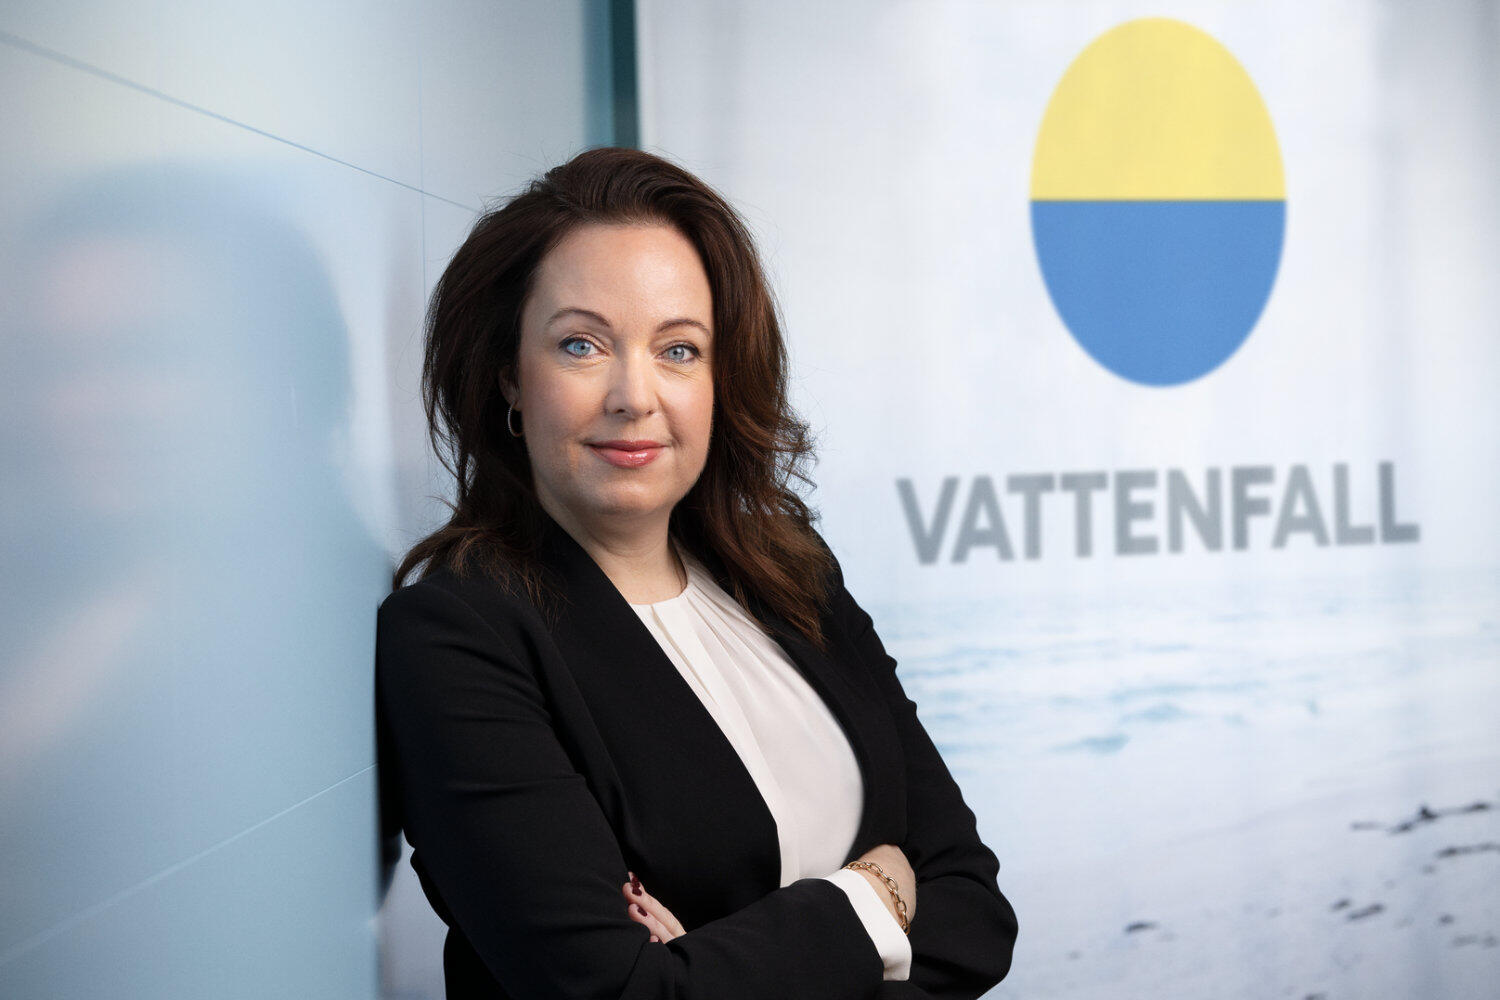 Vattenfall CEO Anna Borg